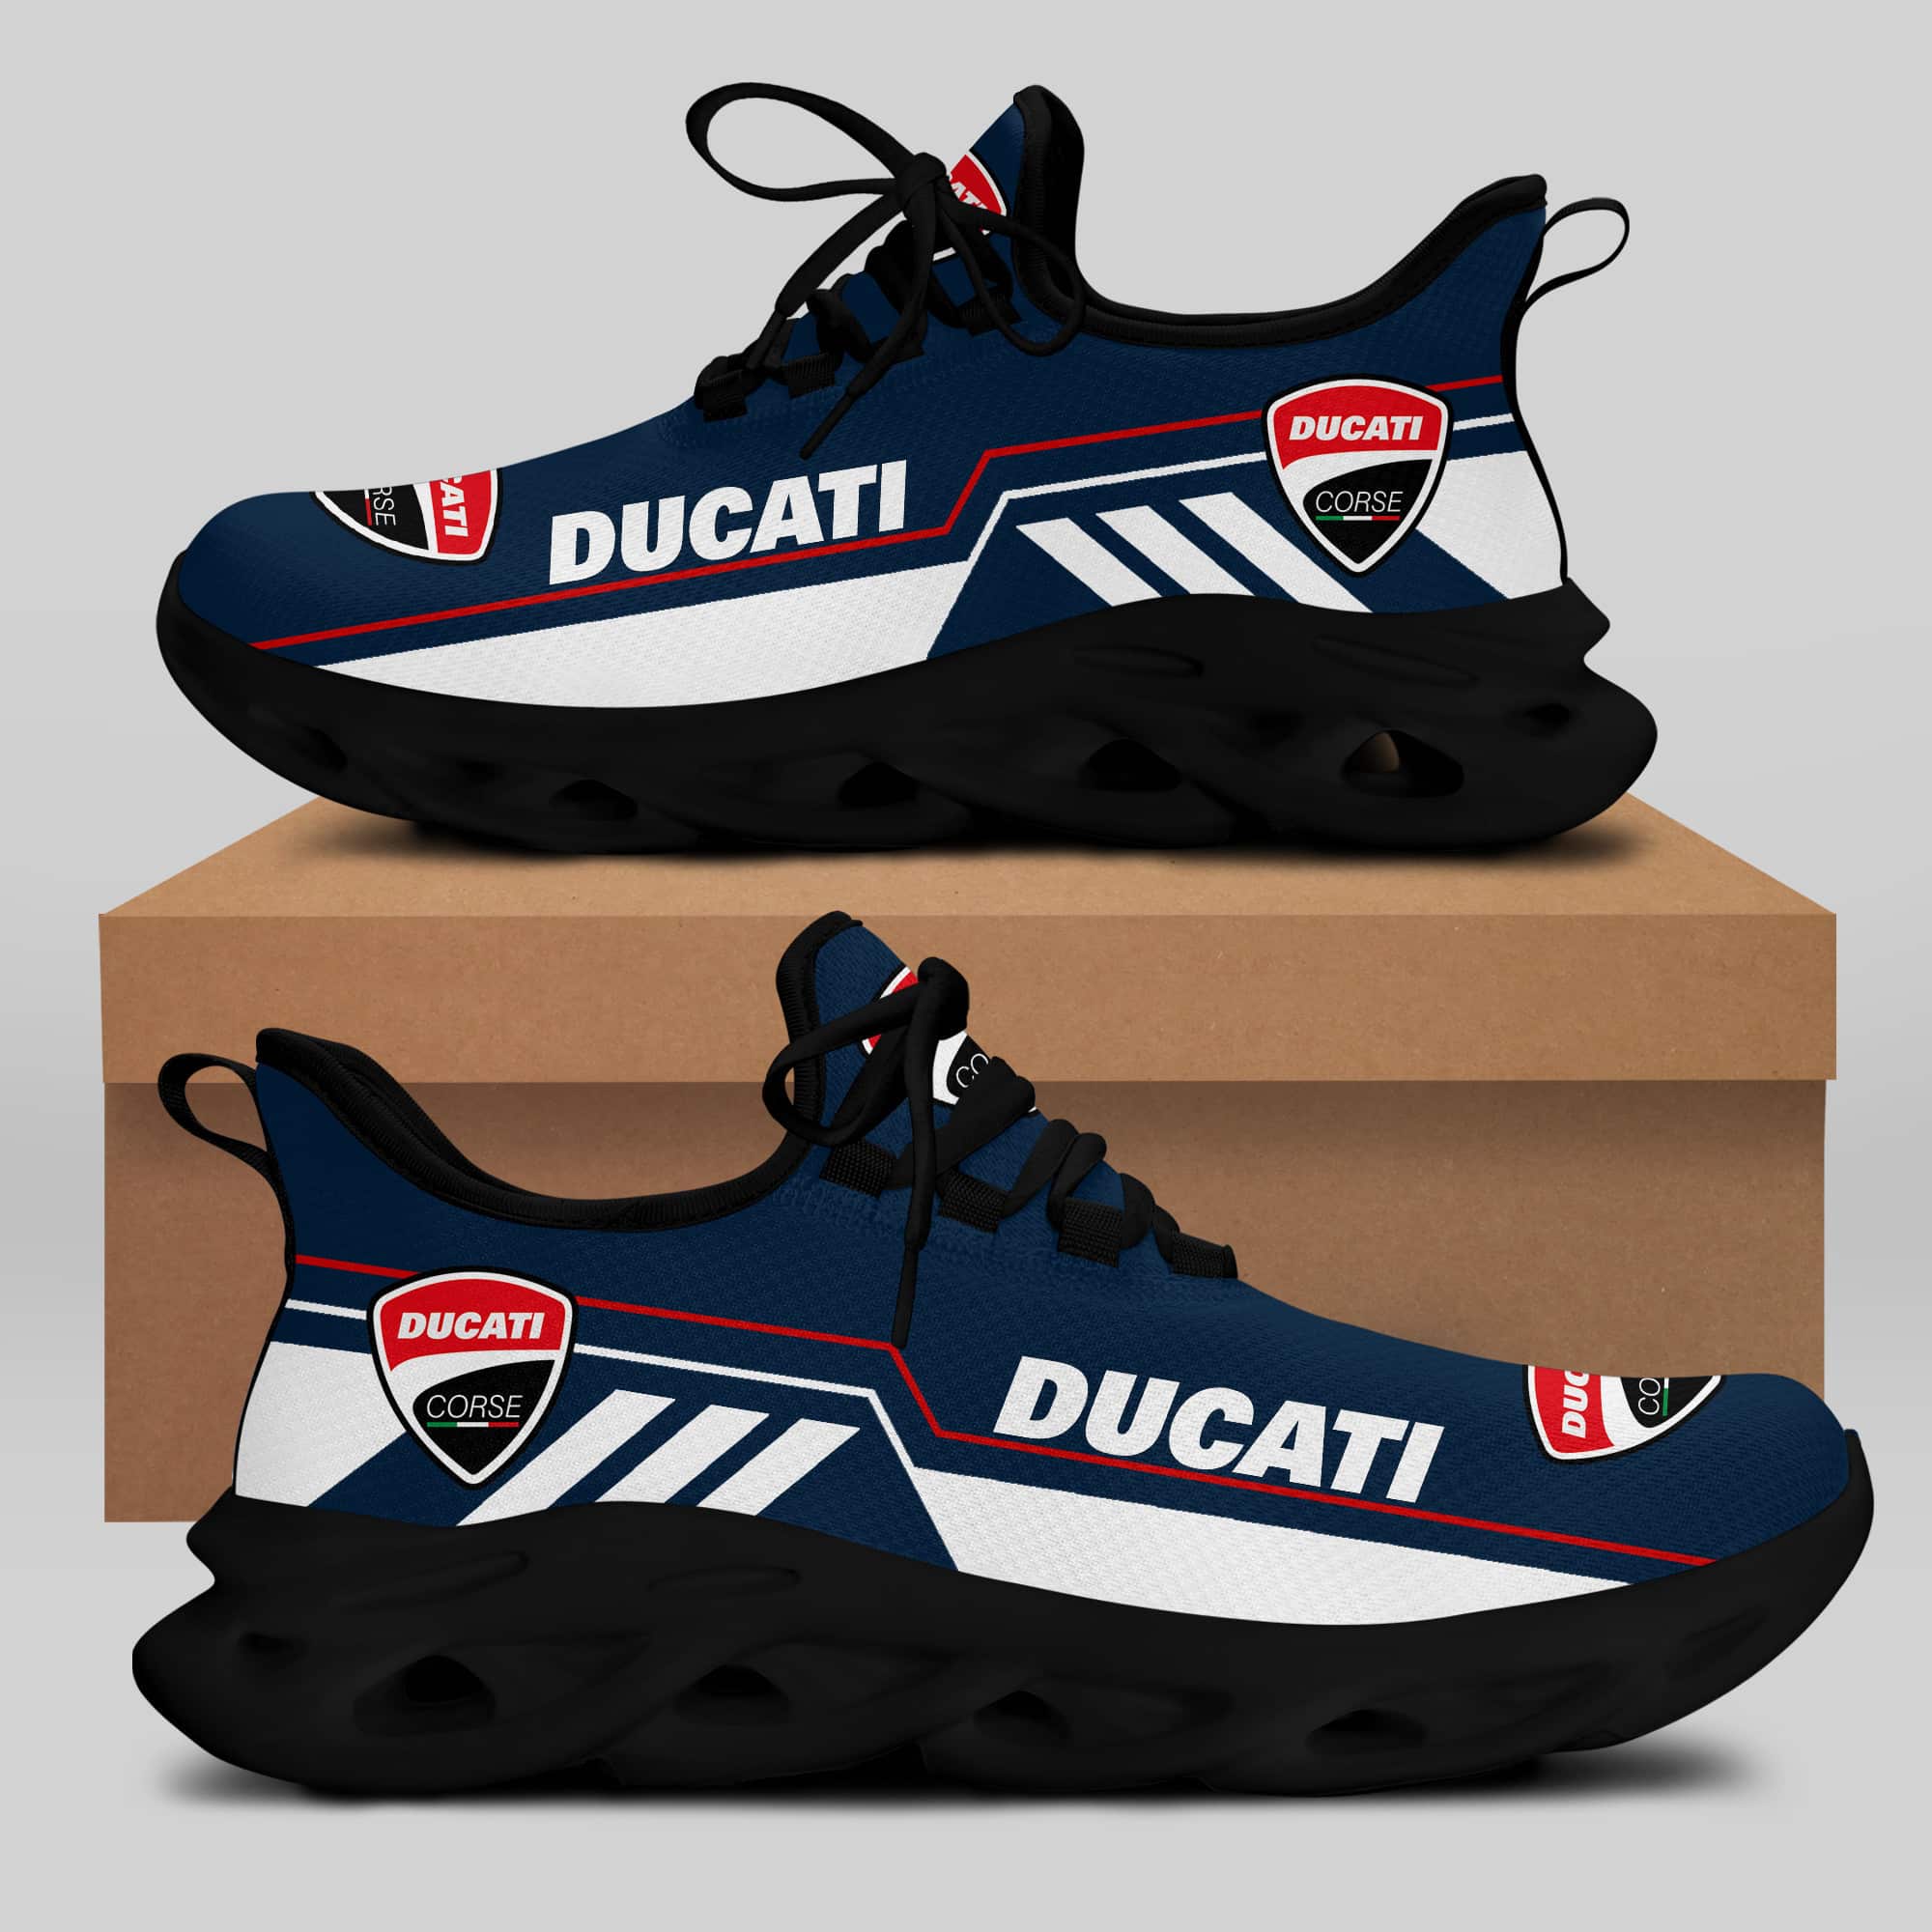 Ducati Racing Running Shoes Max Soul Shoes Sneakers Ver 22 1